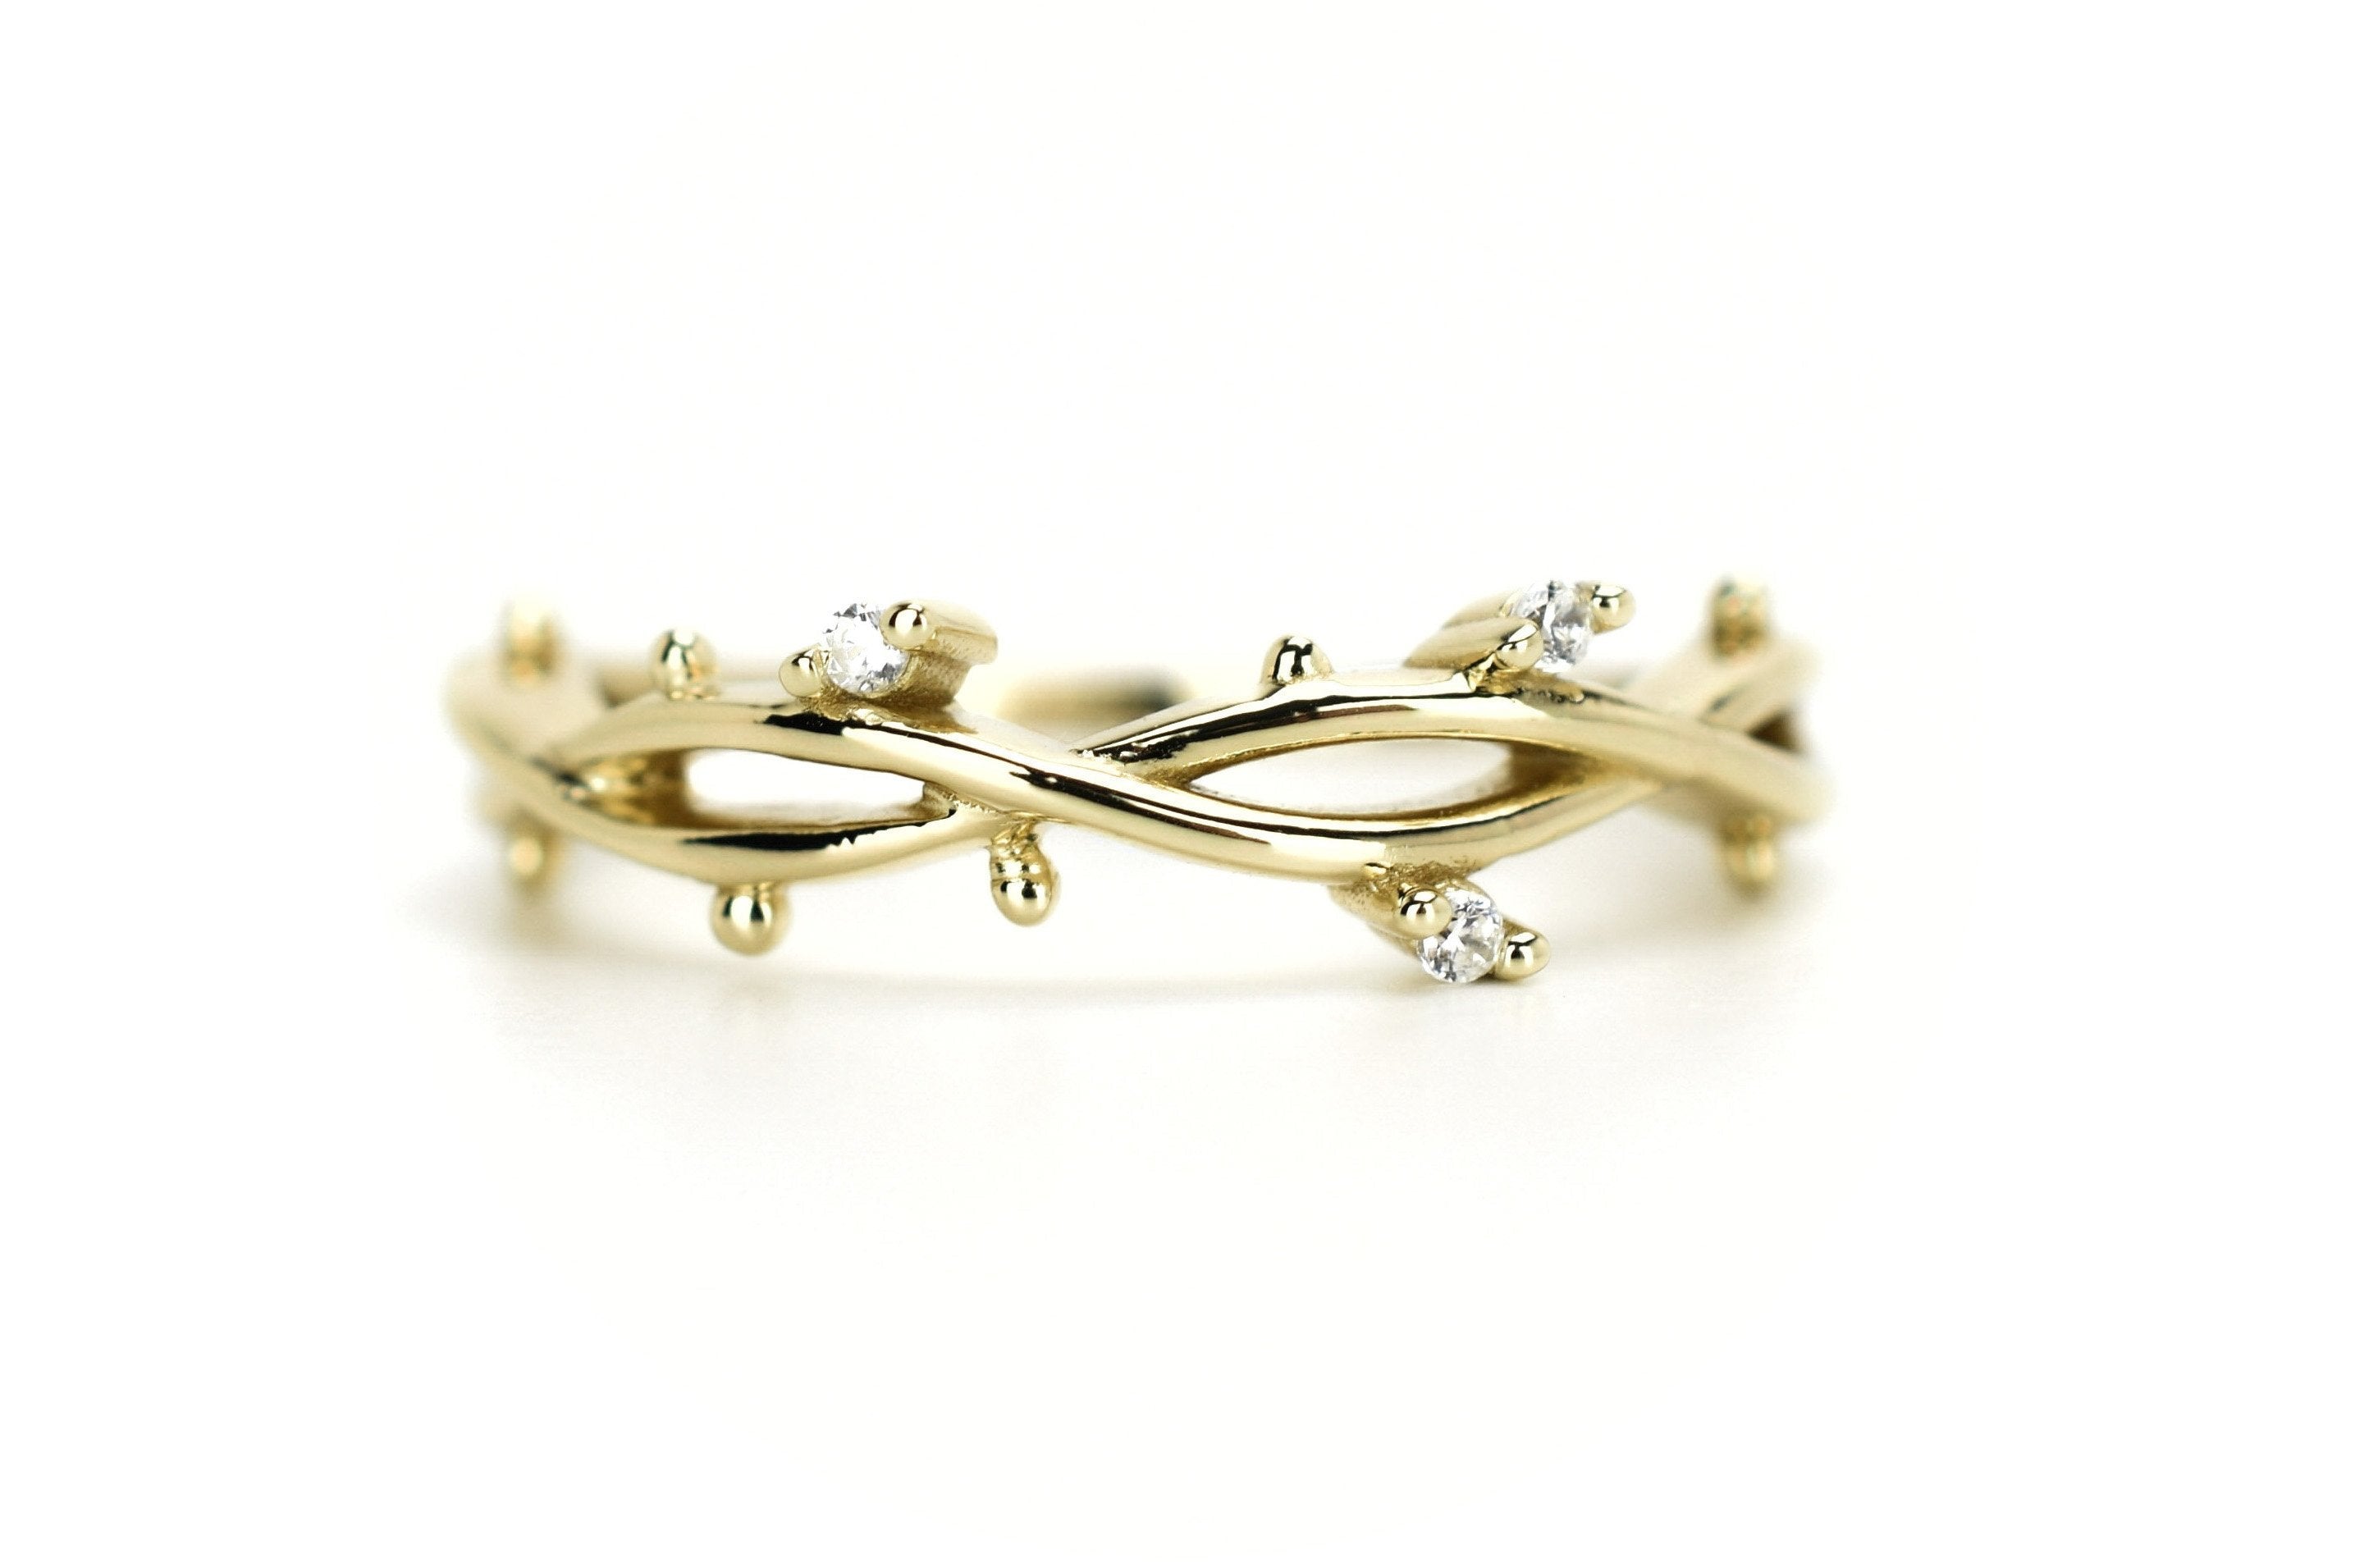 gouden bloemen ring, ring met blaadjes, ring met stenen, verlovingsring, rosegoud ring, zilveren verlovingsring